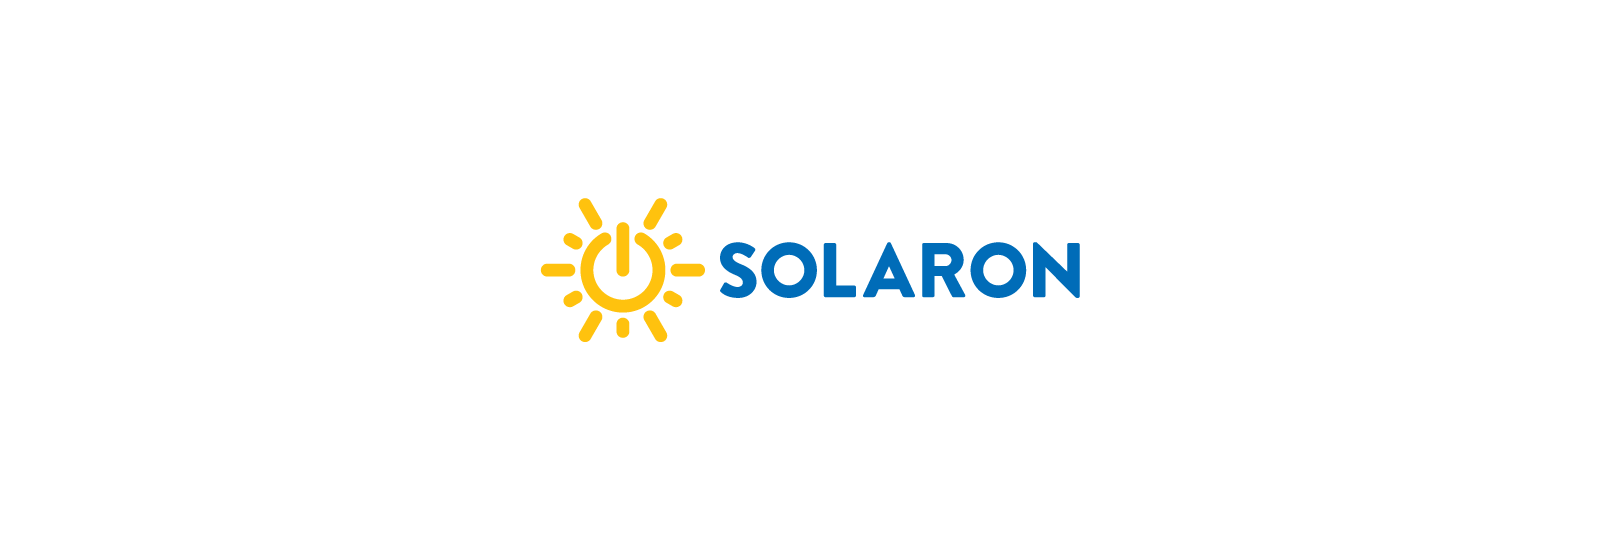 Solaron branding and logo design by Indigo branding